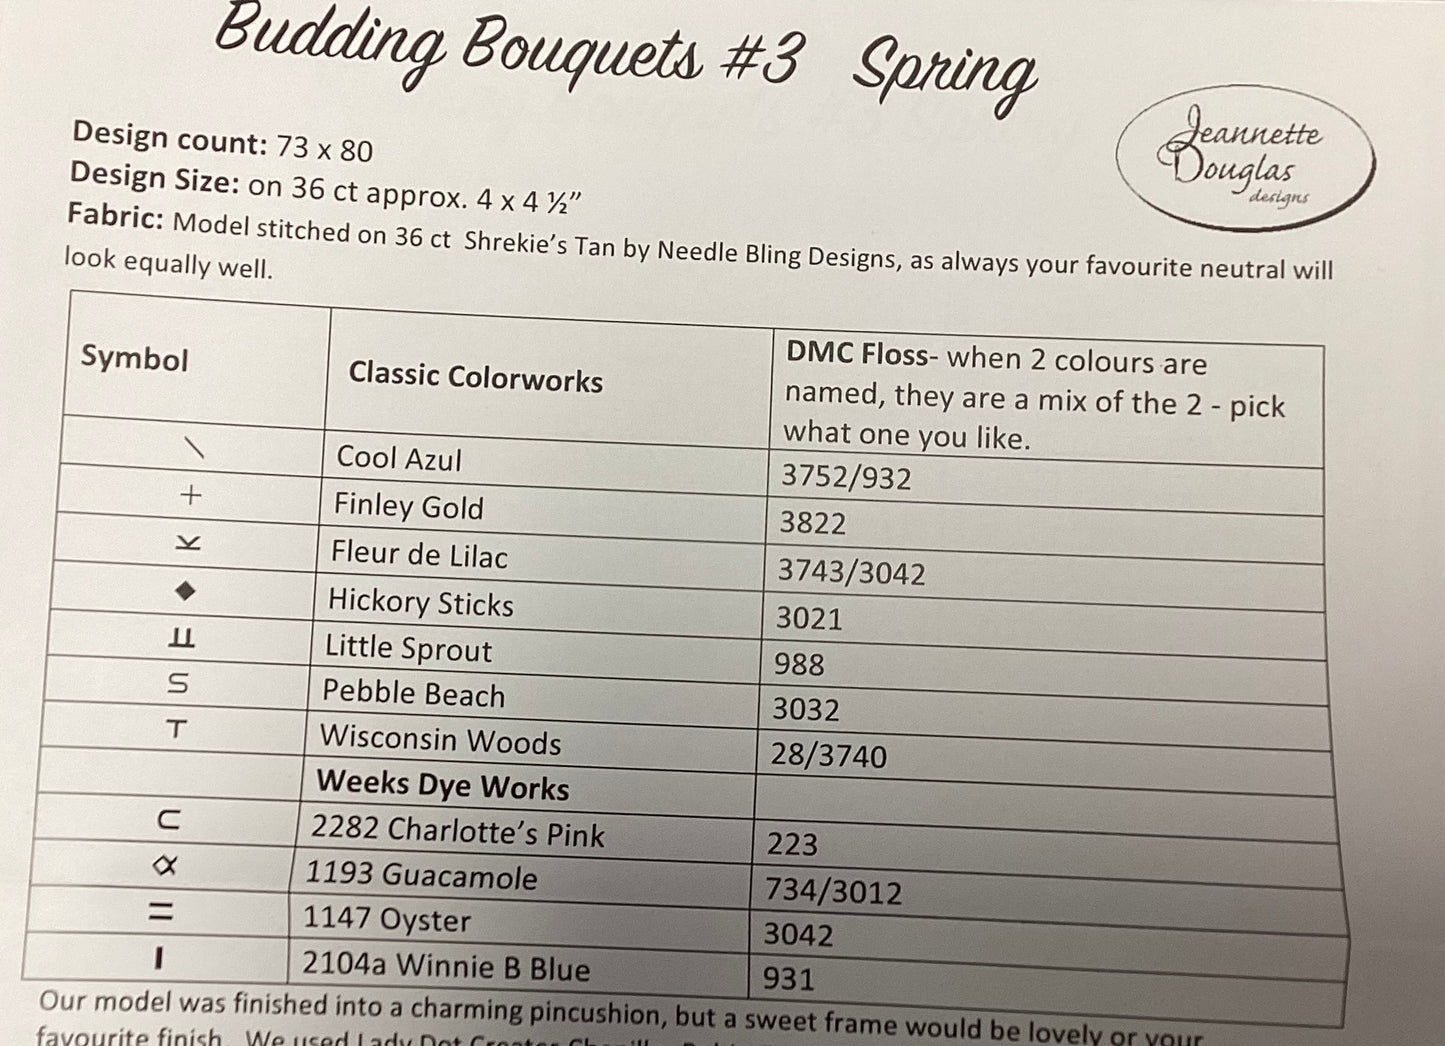 Budding Bouquets #3-Spring By Jeannette Douglas Designs